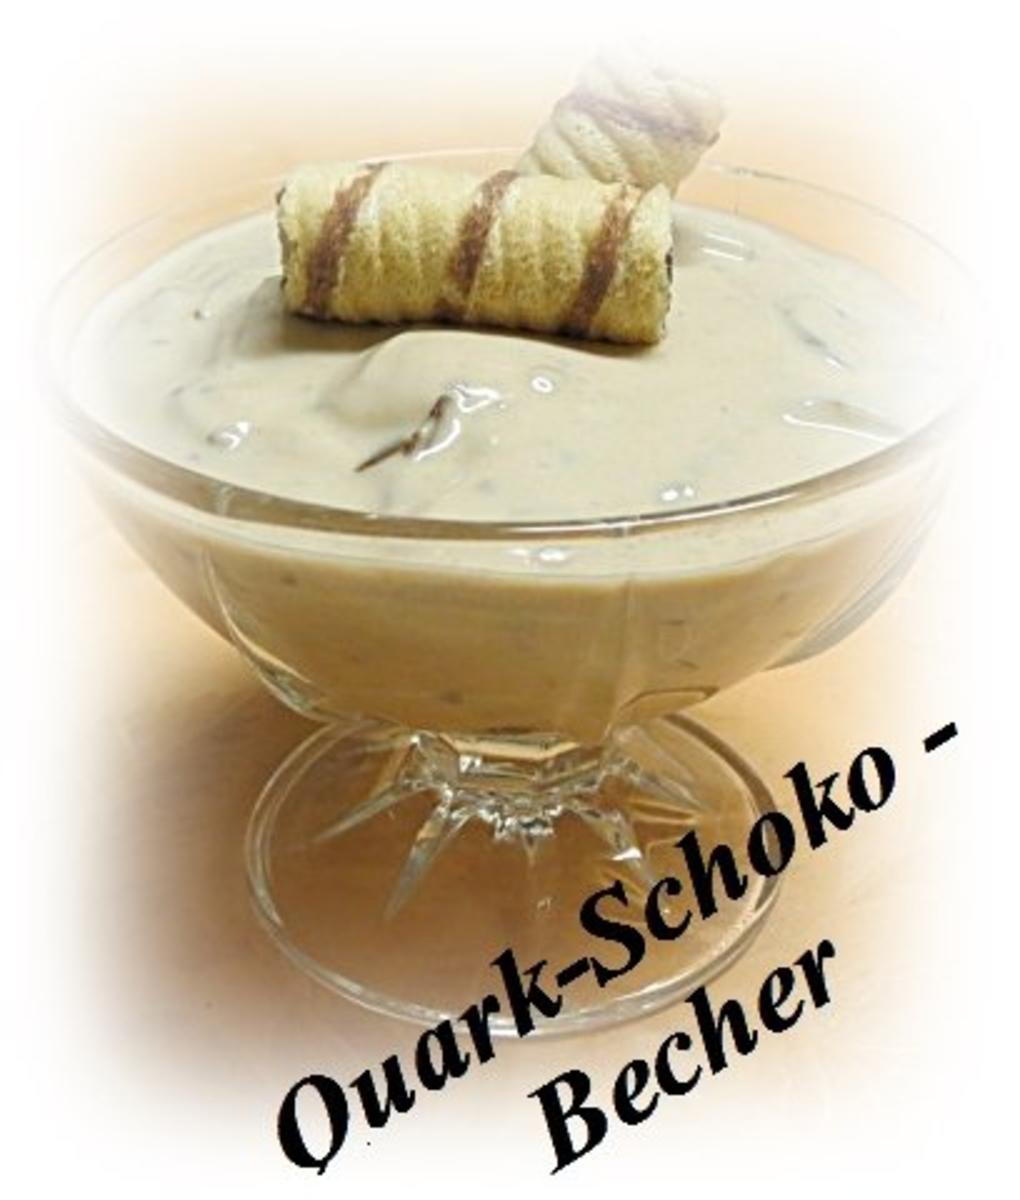 Sisserl’s ~ Quark-Schoko – Becher - Rezept